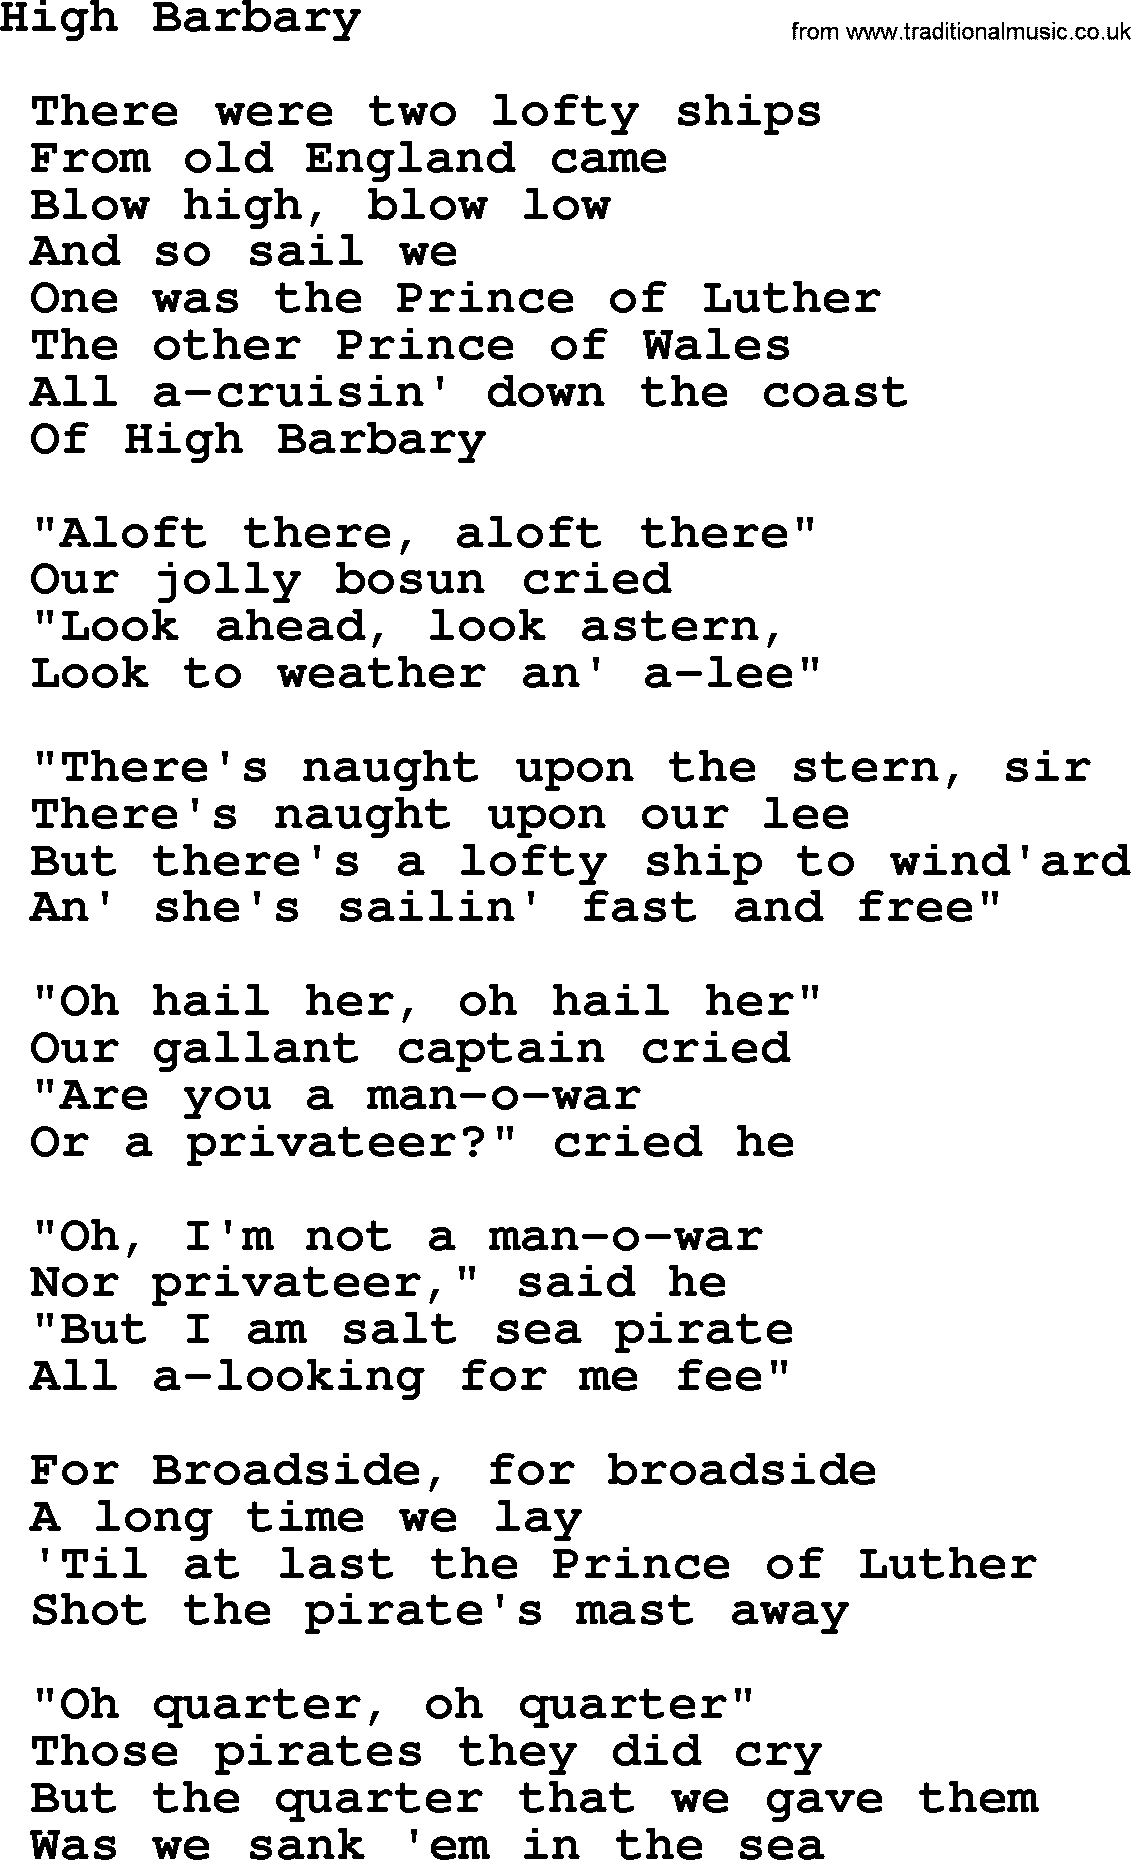 Sea Song or Shantie: High Barbary, lyrics